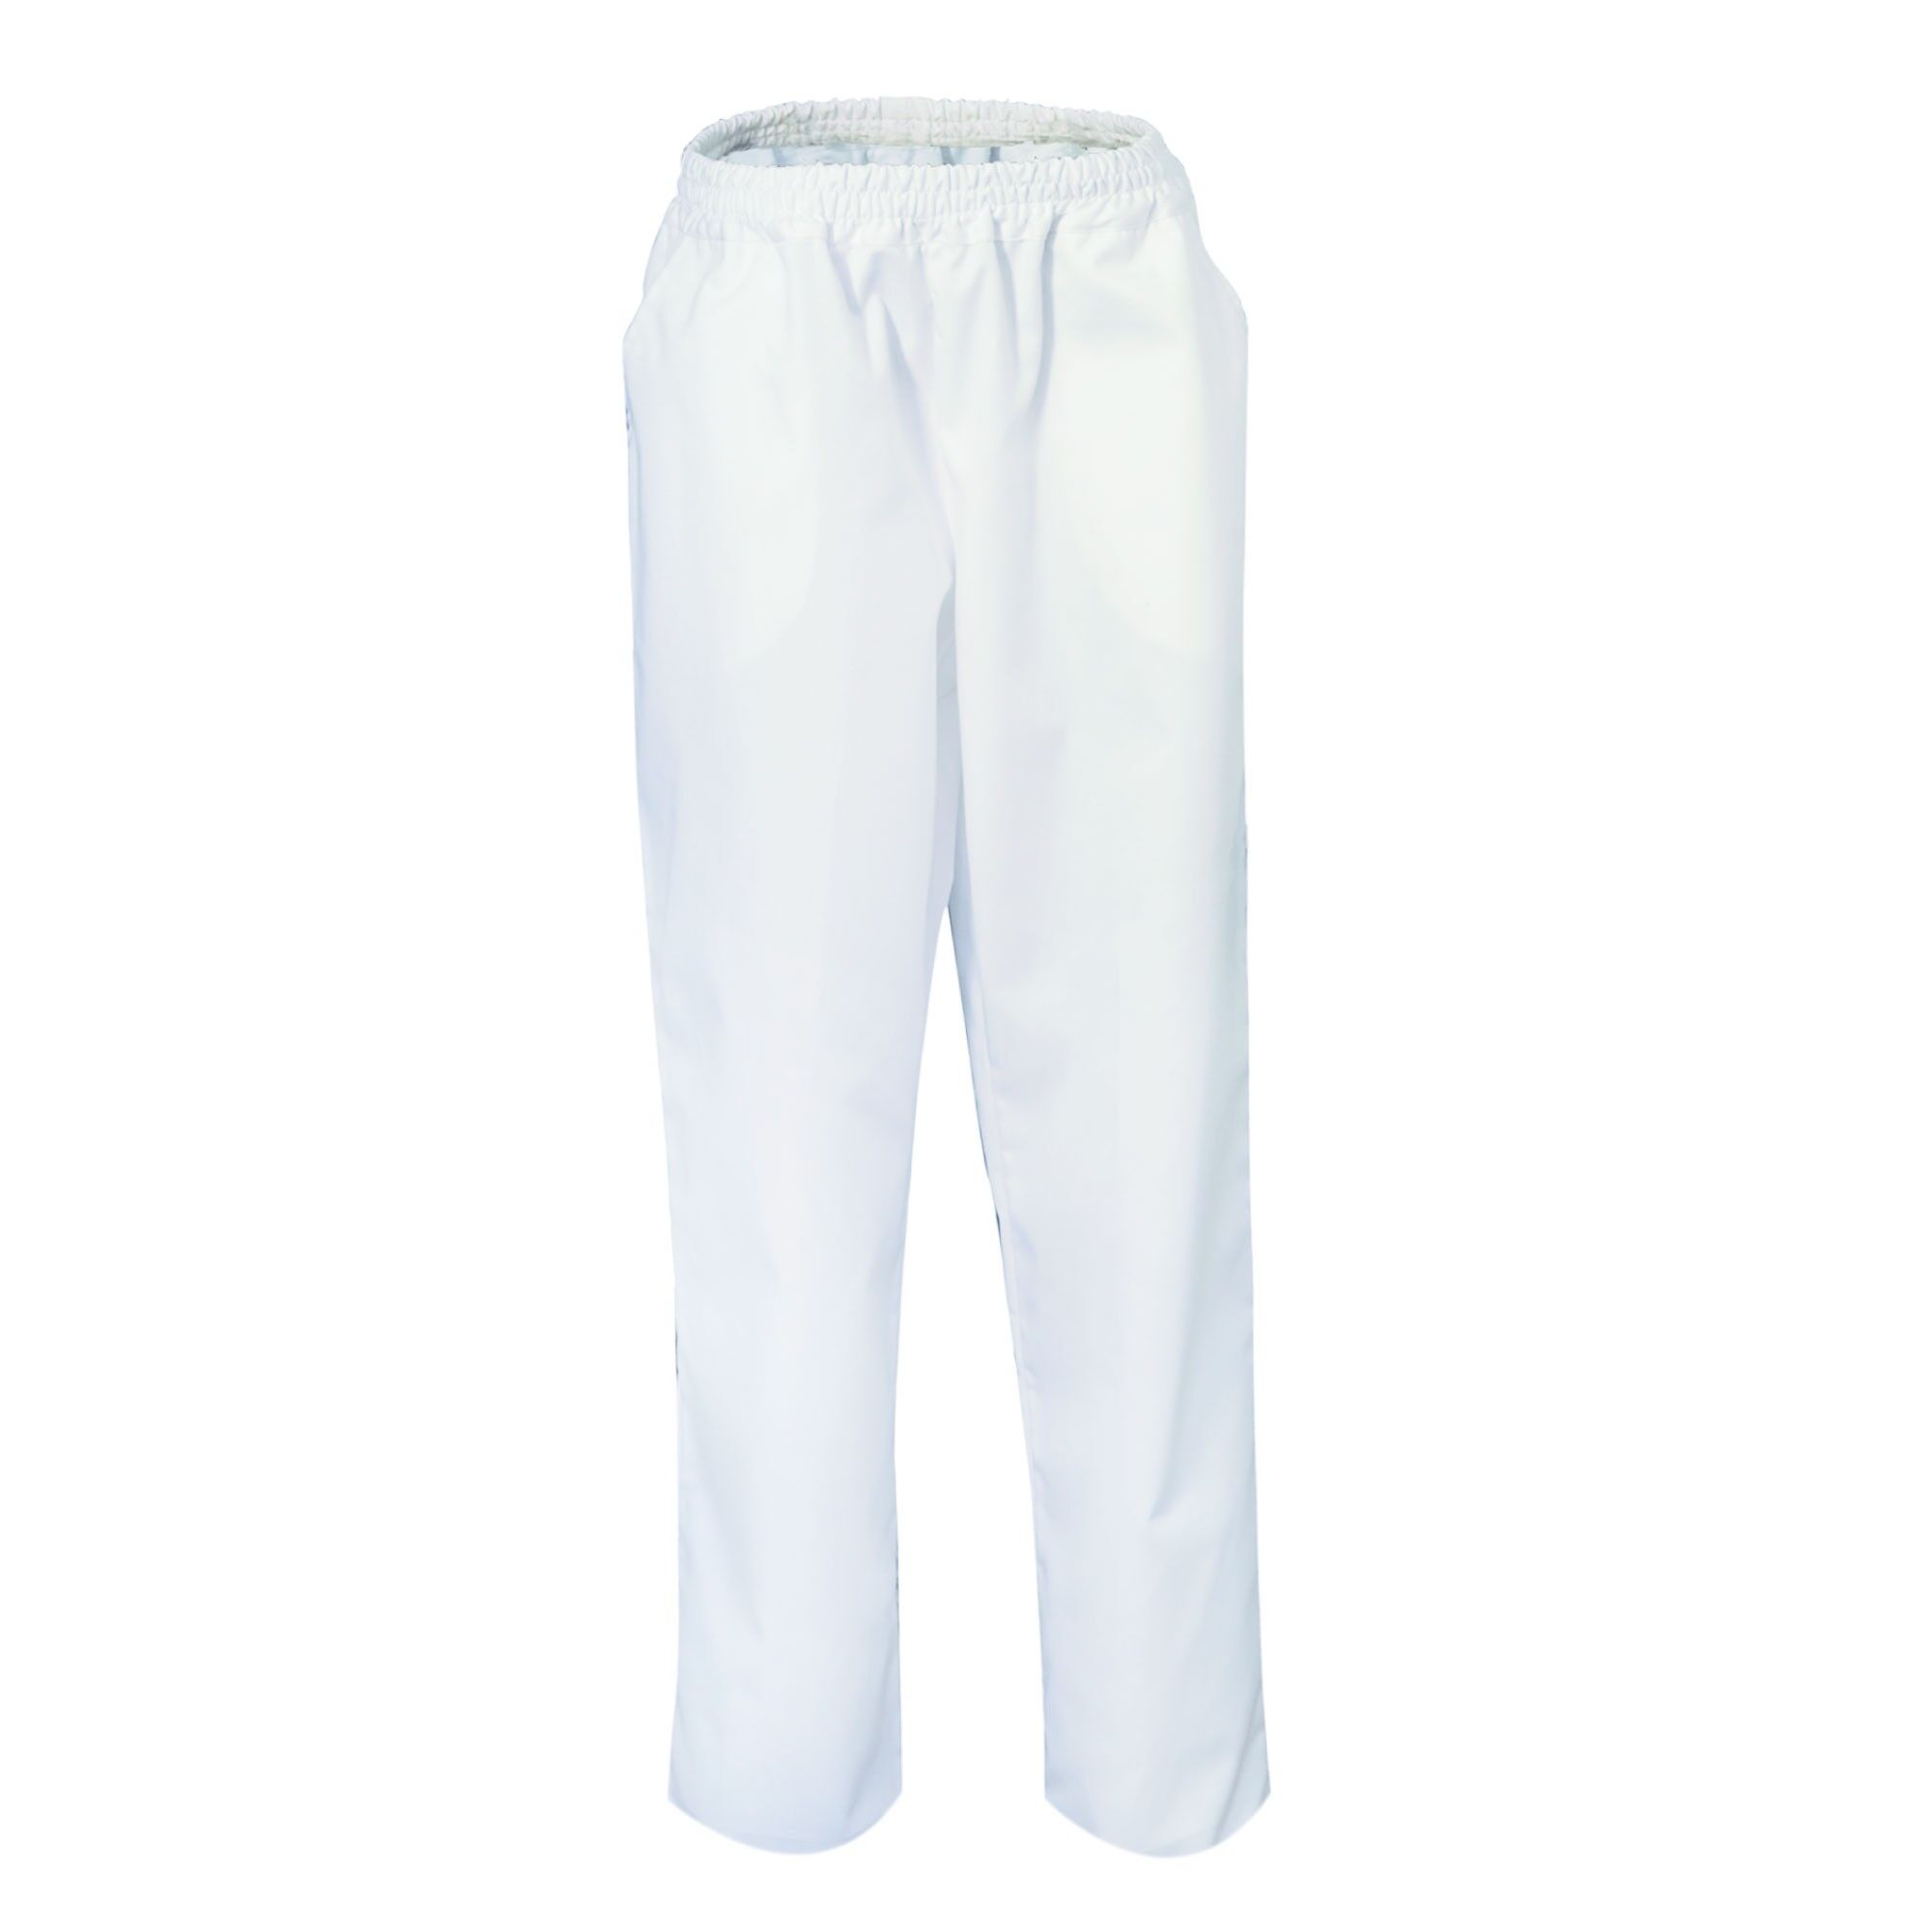 Buy wholesale SELF-DISINFECTANT Unisex Sanitary Pants | Size S